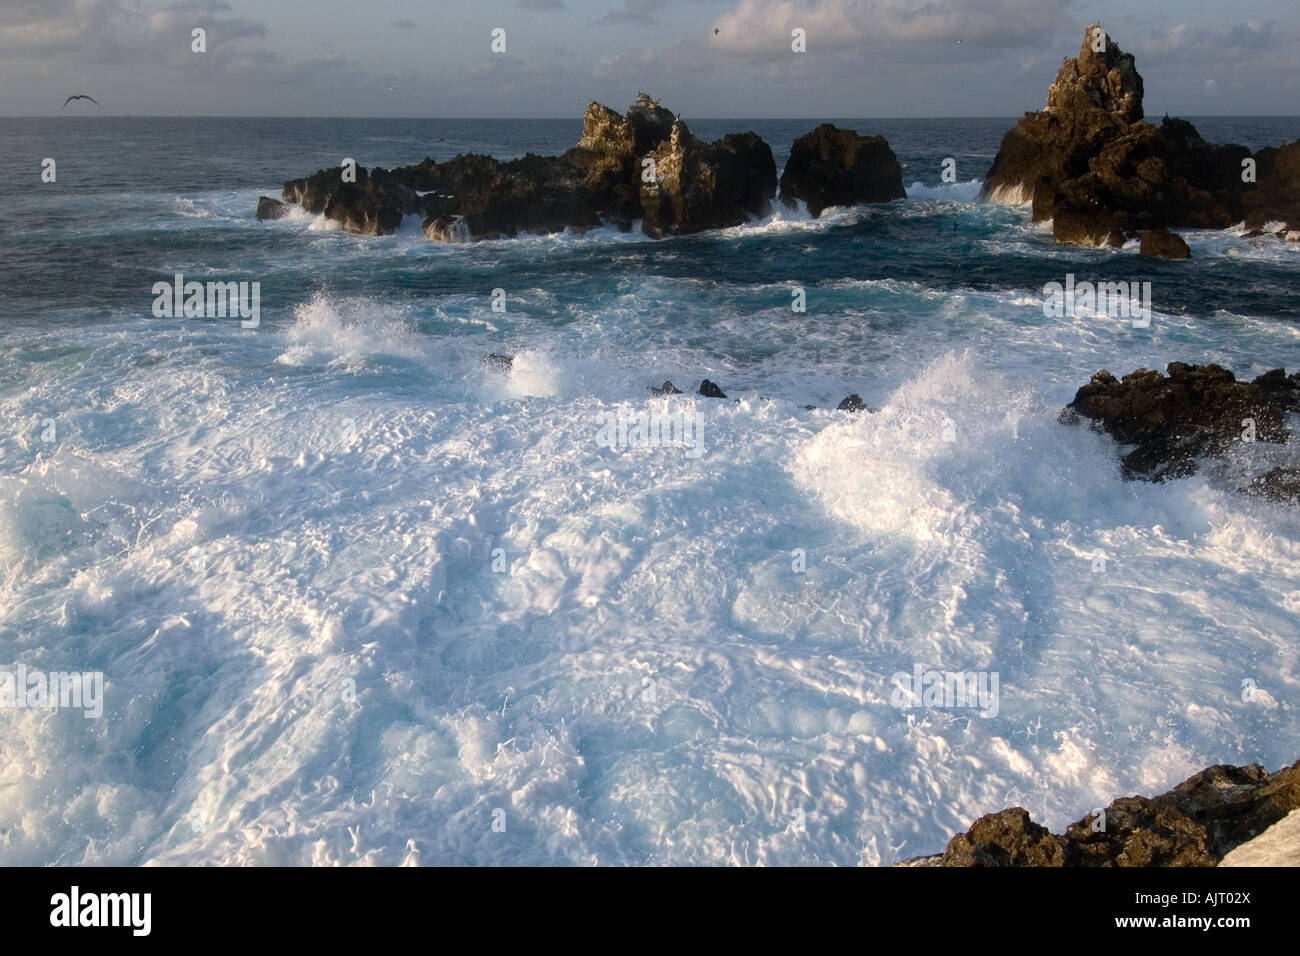 Absturz über Felsen St. Peter und St. Paul s Welle schaukelt Brasilien Atlantik Stockfoto